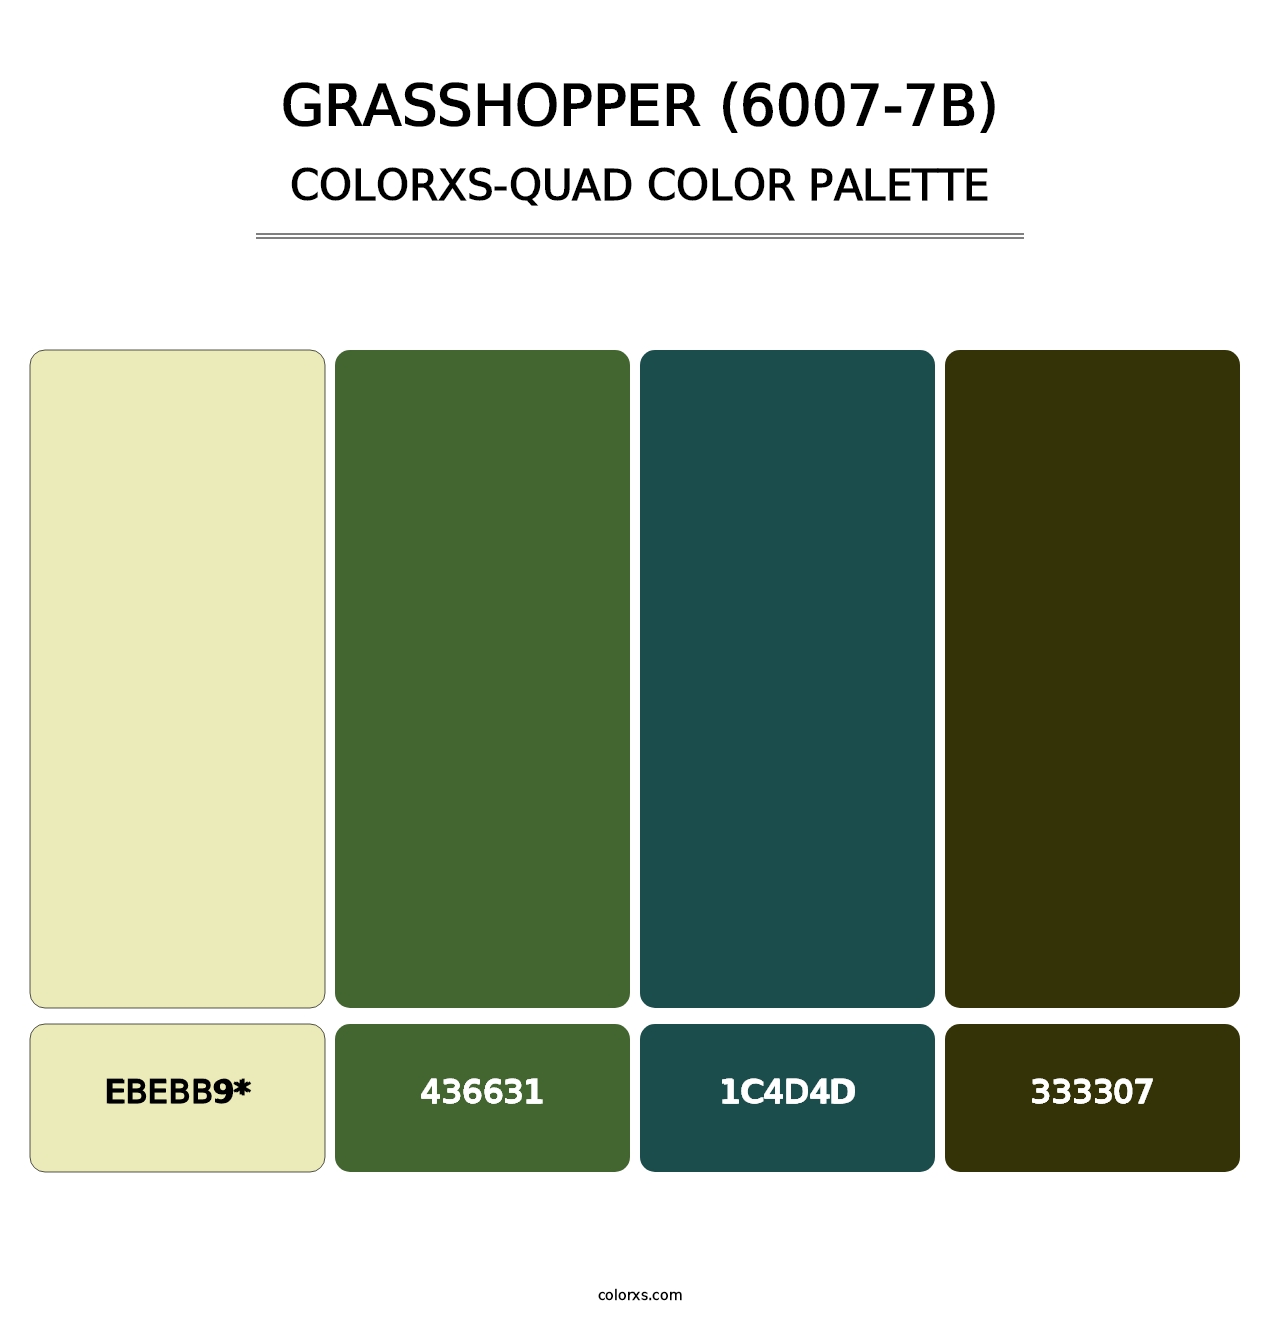 Grasshopper (6007-7B) - Colorxs Quad Palette